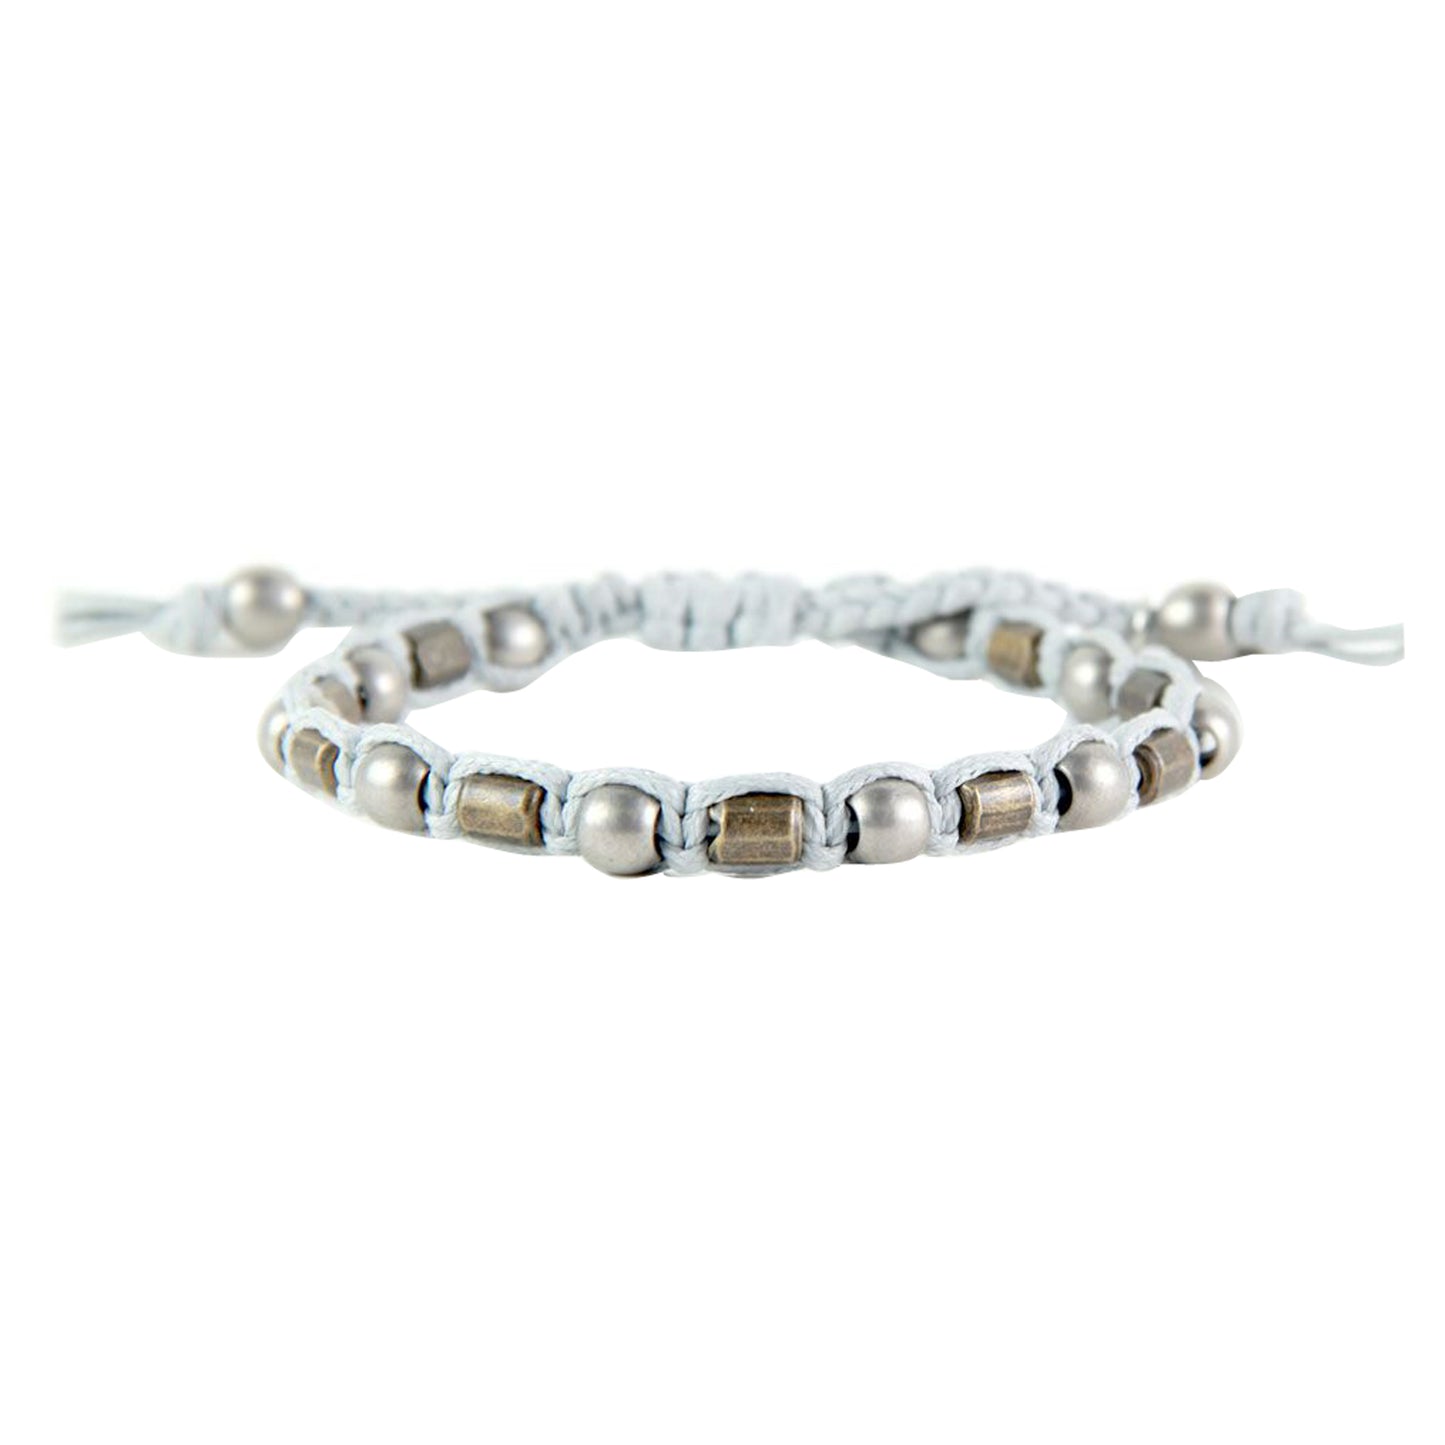 Adjustable Nylon Bracelet with Metal Round and Rectangluar Beads